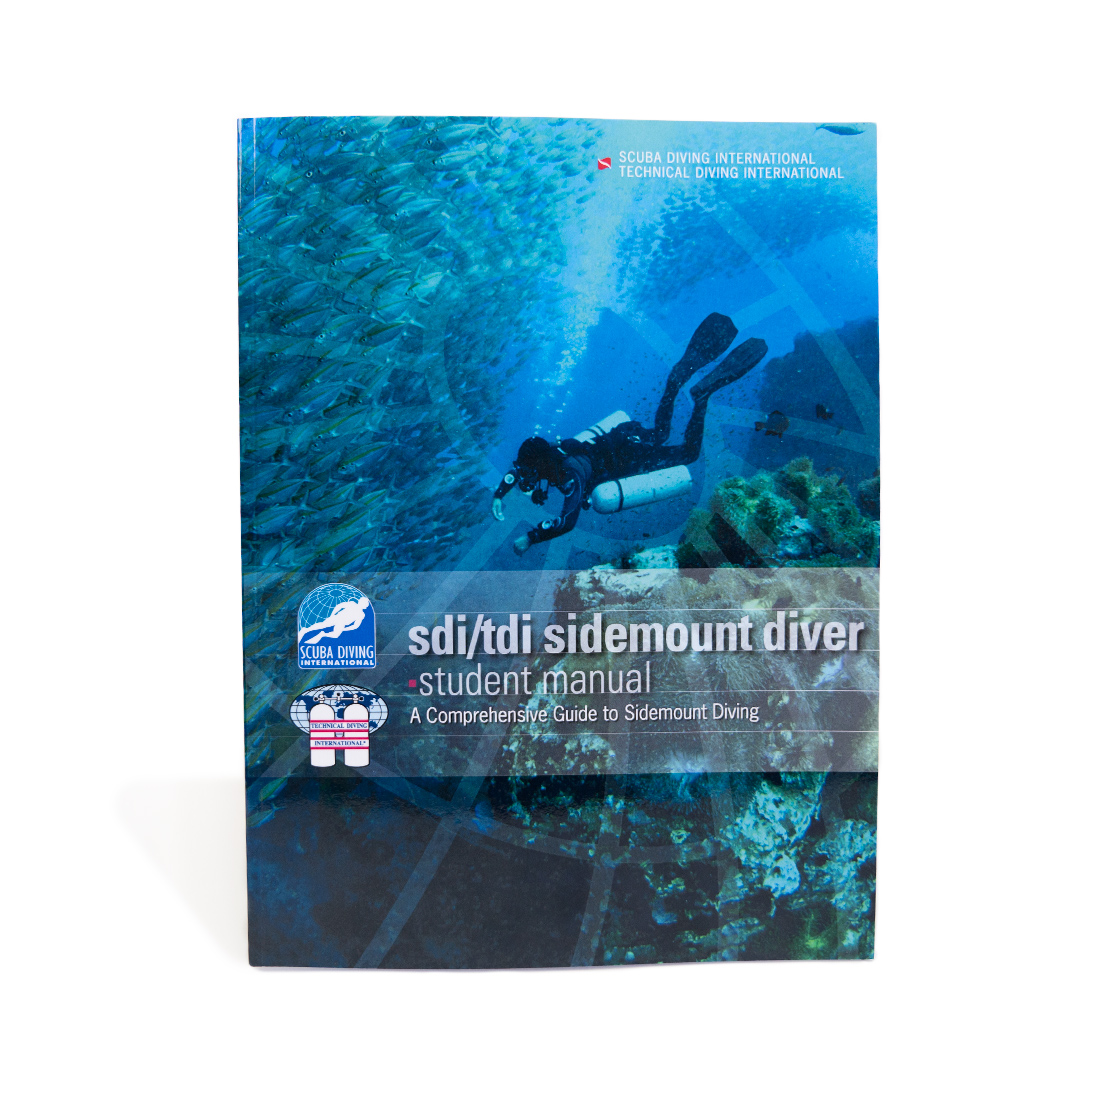 SDI/TDI Sidemount Diver Student Manual